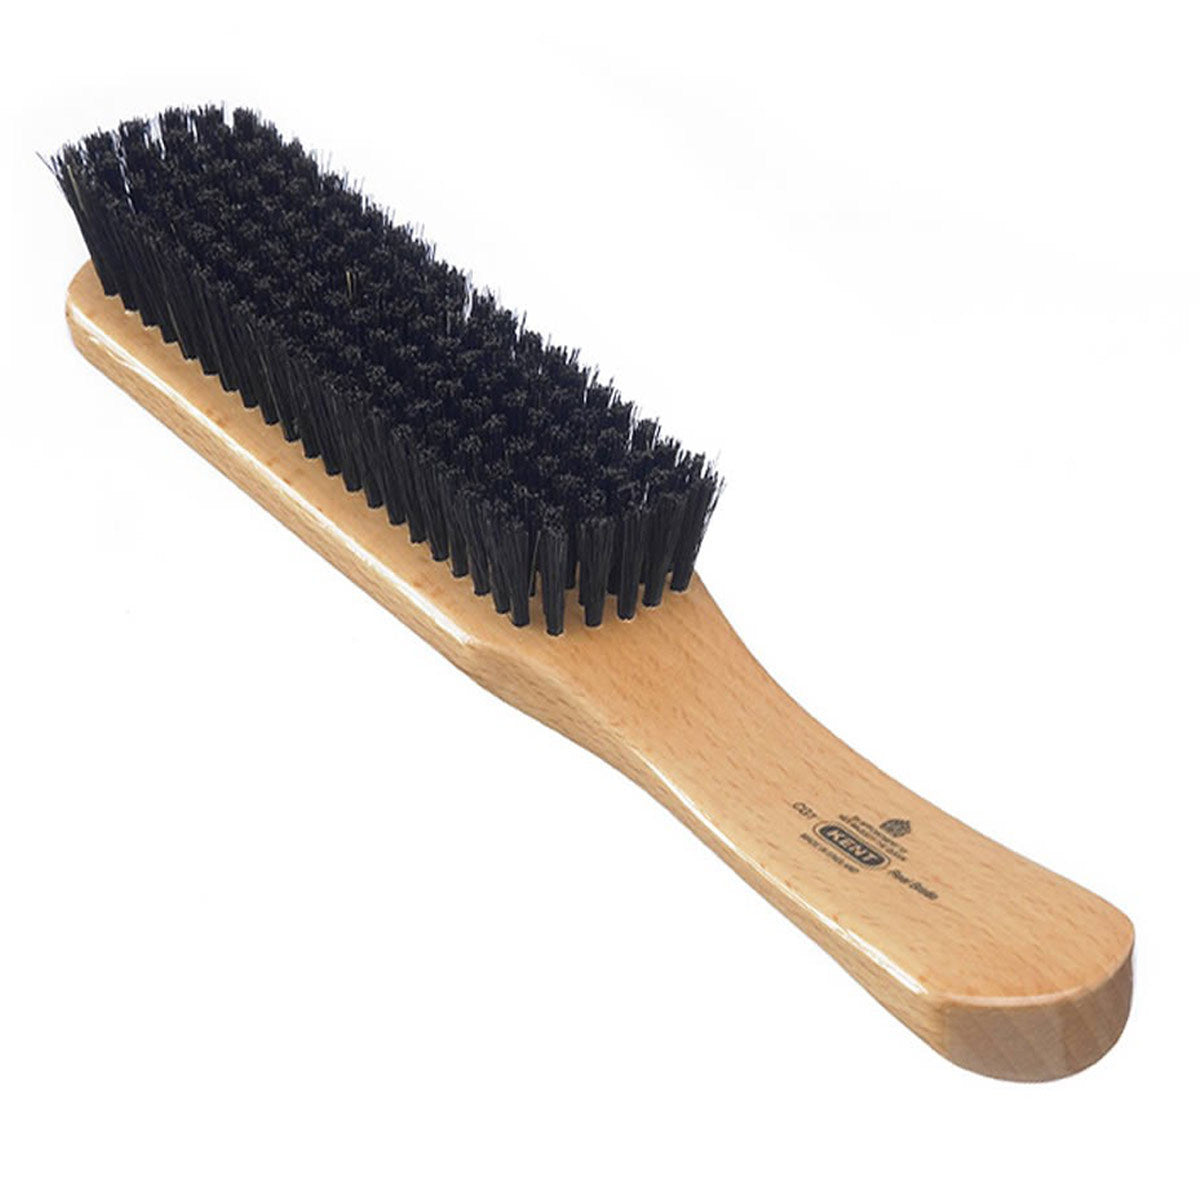 Primary image of Medium Clothing Brush Cherrywood Black Bristle - CG1